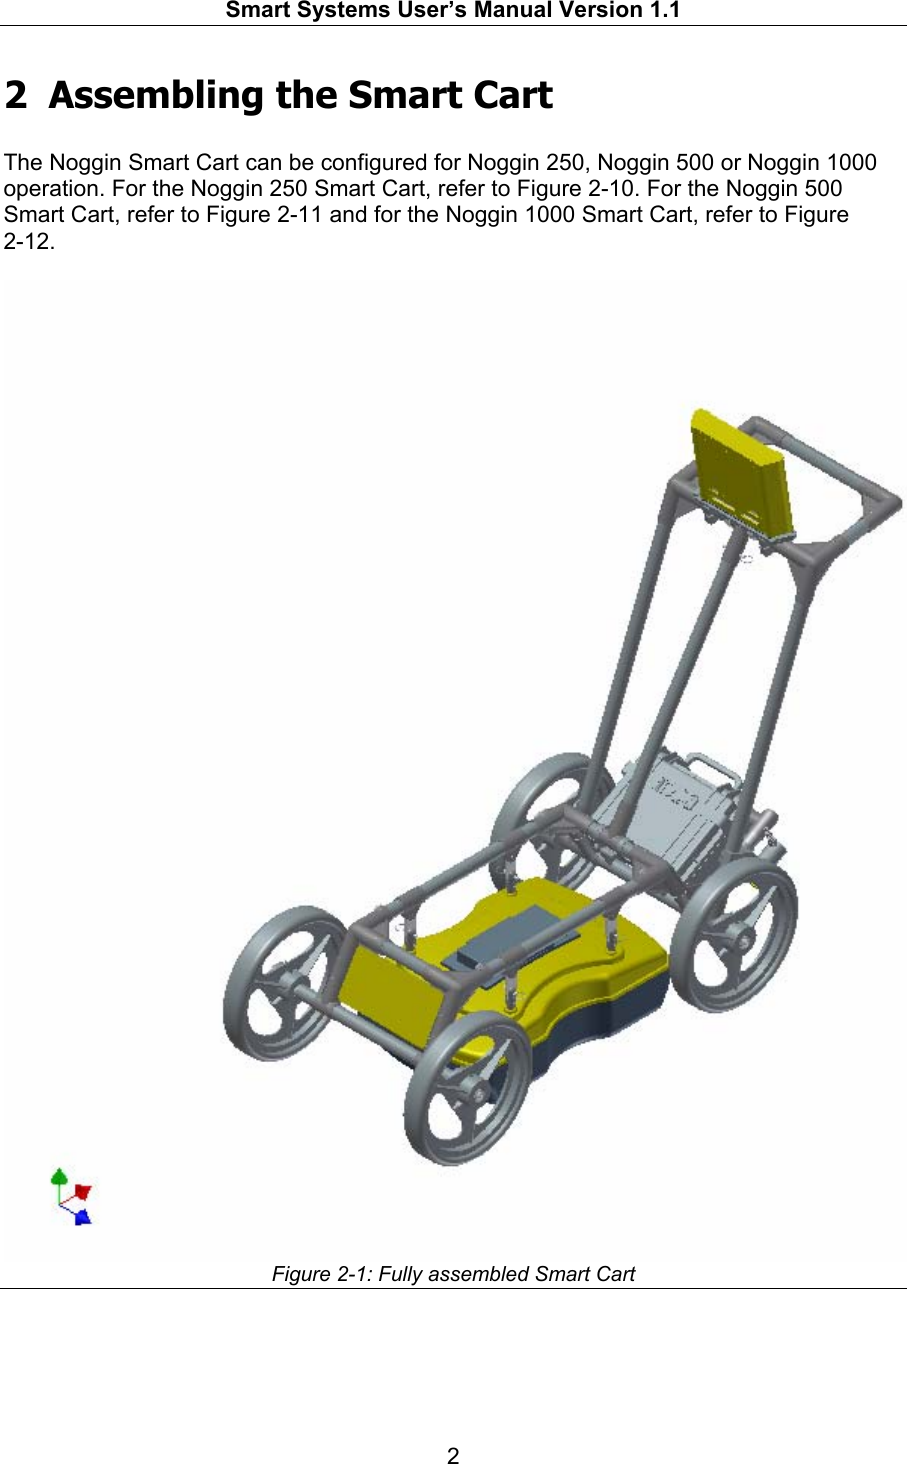   Smart Systems User’s Manual Version 1.1  2  2 Assembling the Smart Cart  The Noggin Smart Cart can be configured for Noggin 250, Noggin 500 or Noggin 1000 operation. For the Noggin 250 Smart Cart, refer to Figure 2-10. For the Noggin 500 Smart Cart, refer to Figure 2-11 and for the Noggin 1000 Smart Cart, refer to Figure 2-12.  Figure 2-1: Fully assembled Smart Cart  